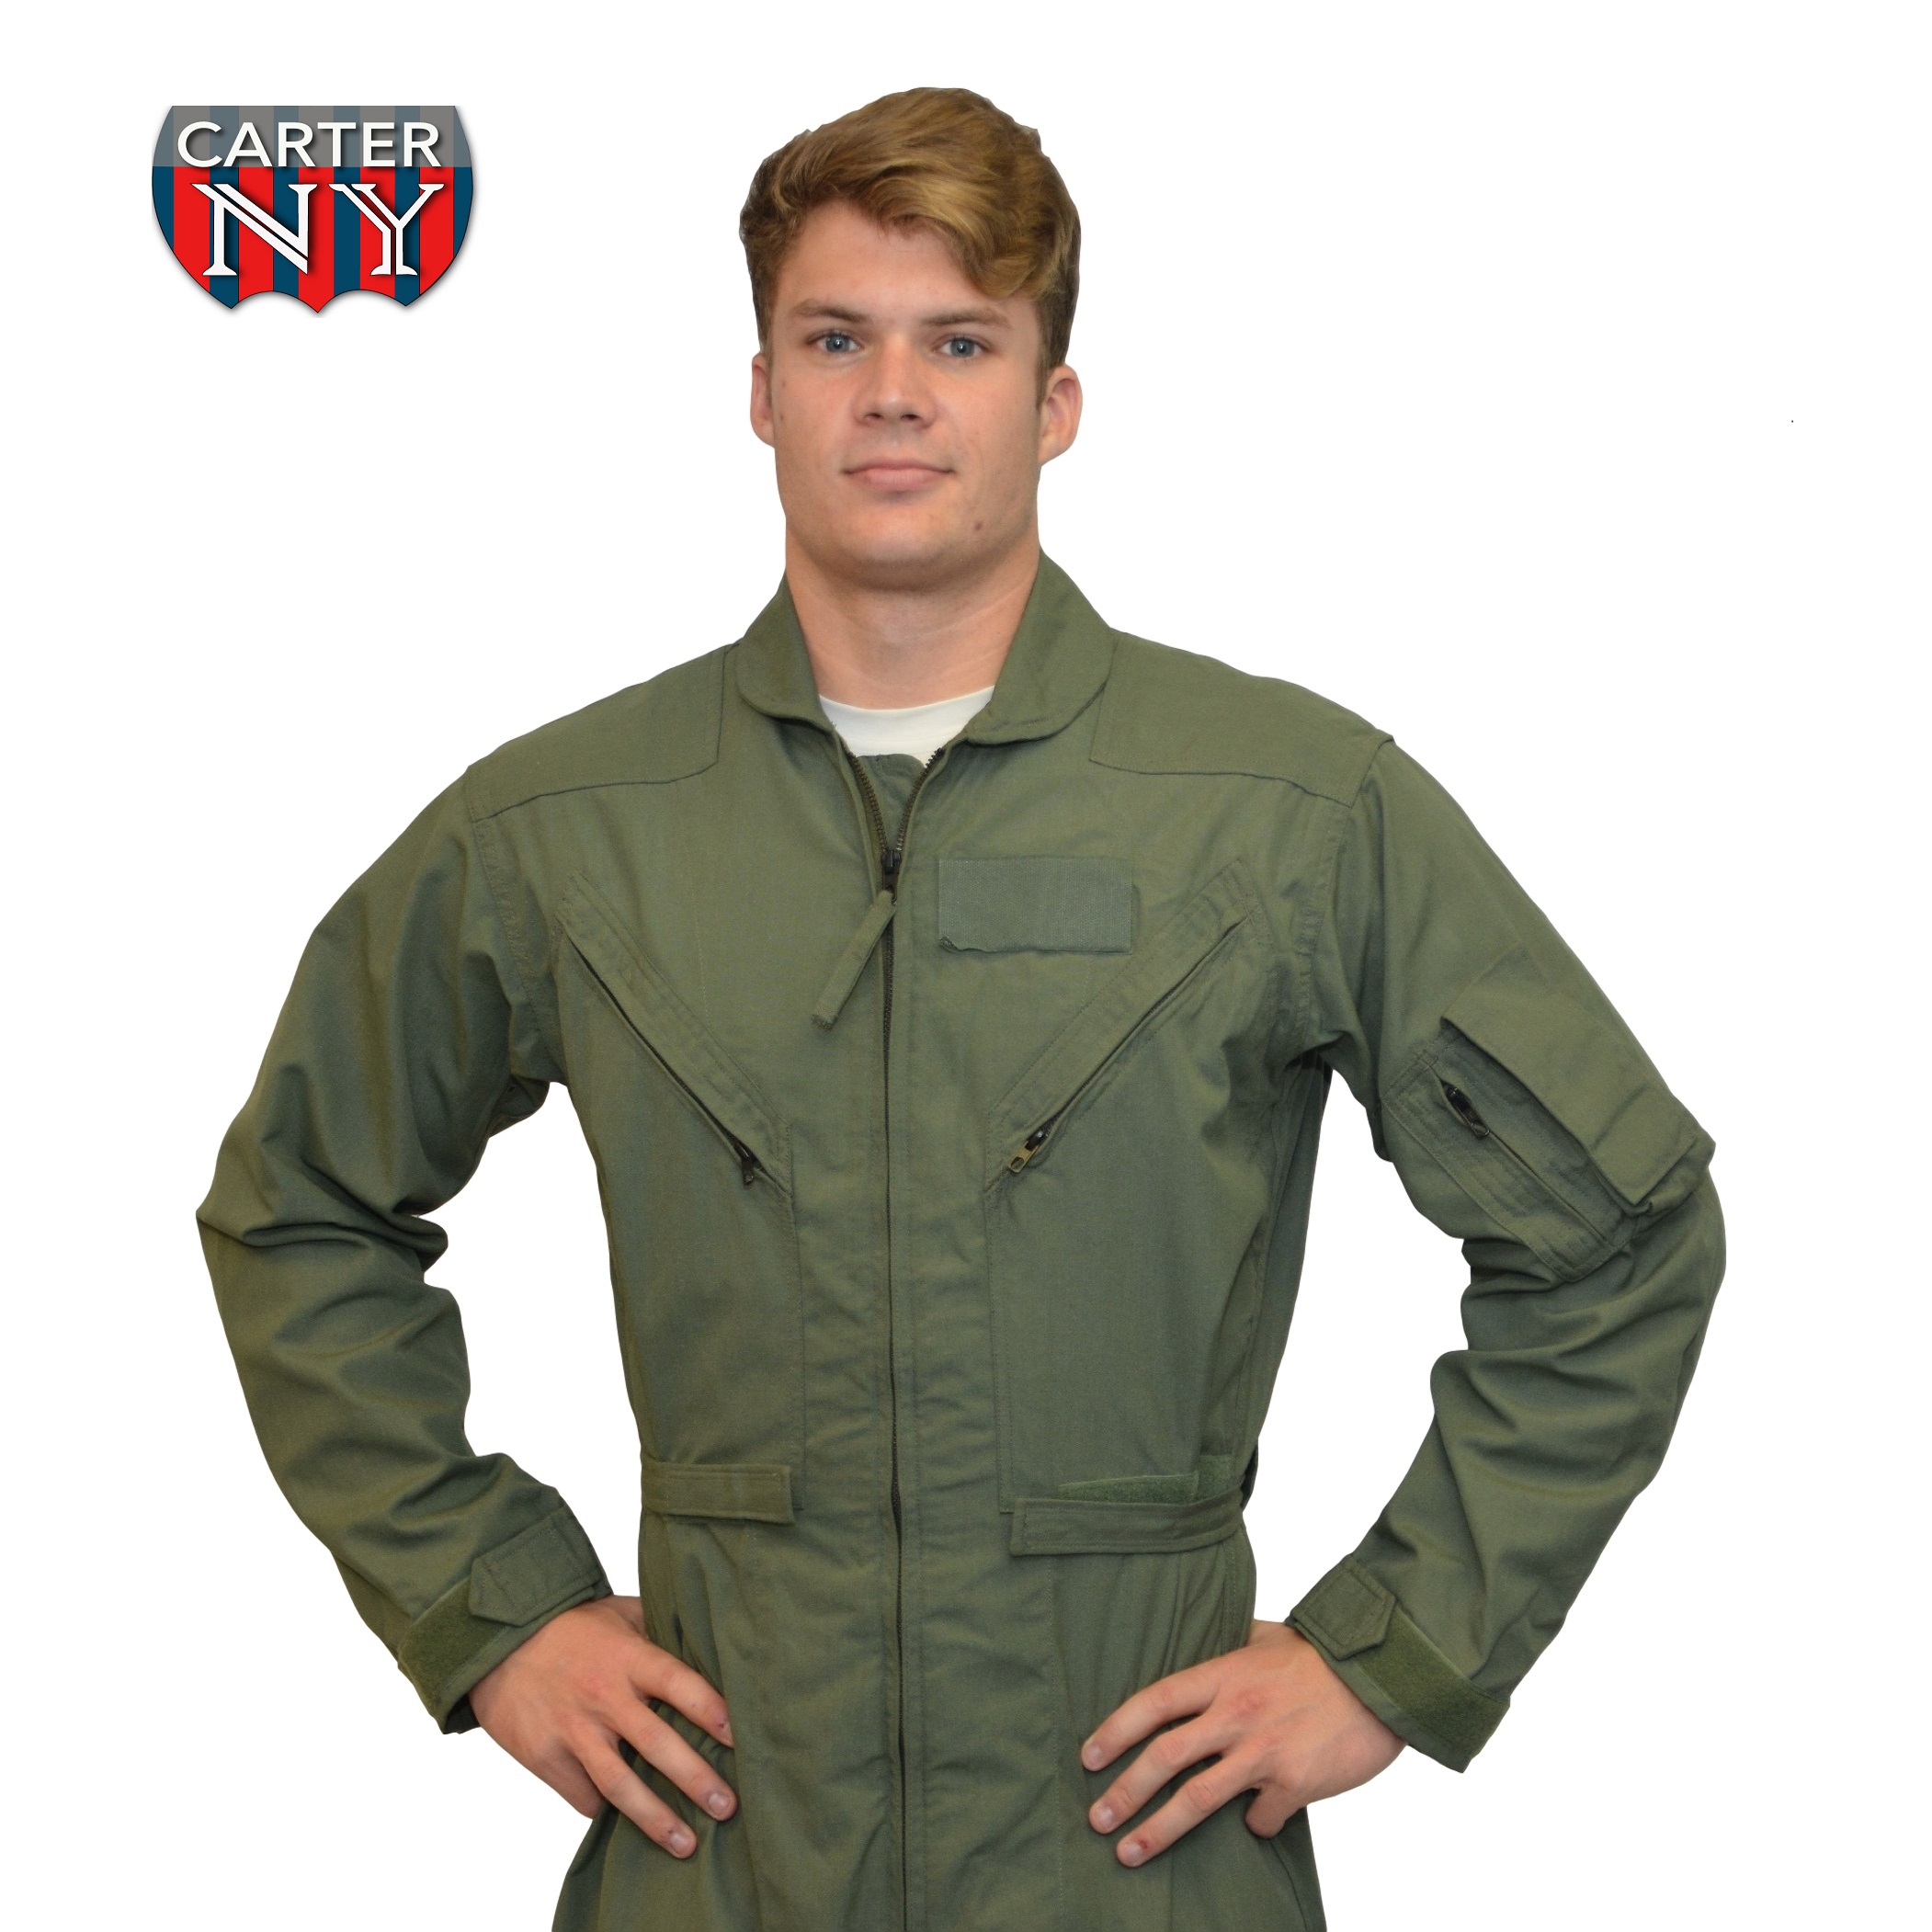 Military Surplus CWU-27/P Summer Flight Suit Nomex Sage Green Size 42L